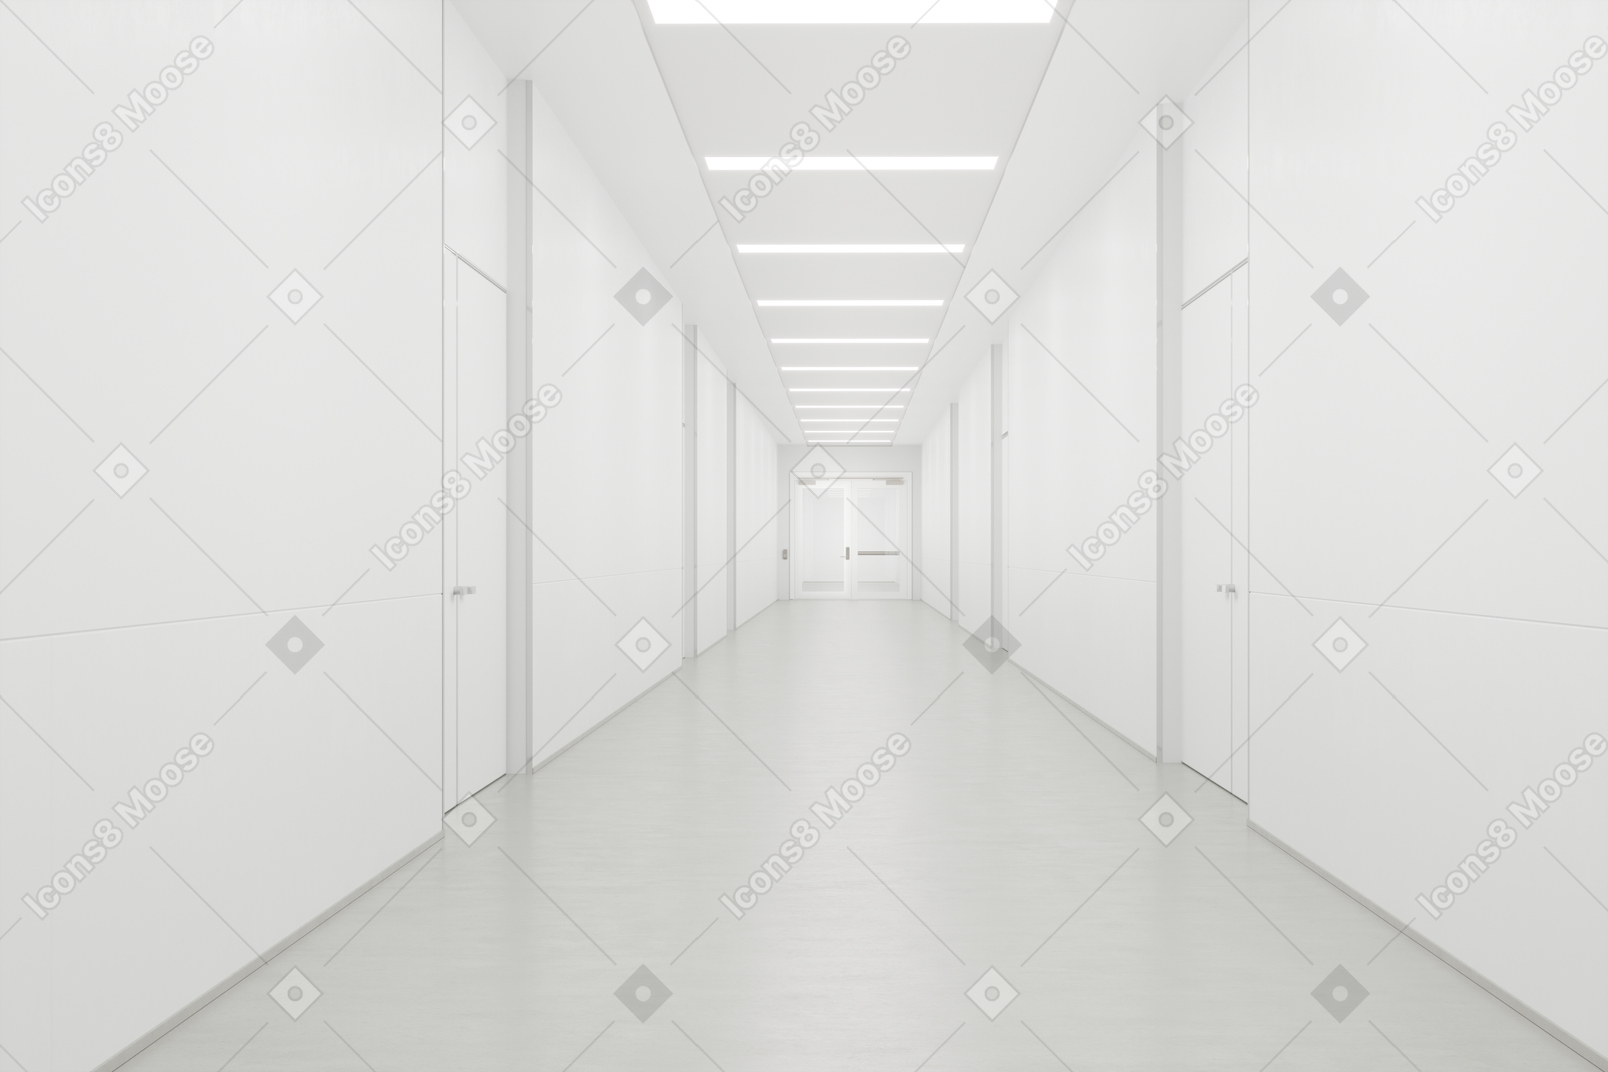 Long white corridor with doors